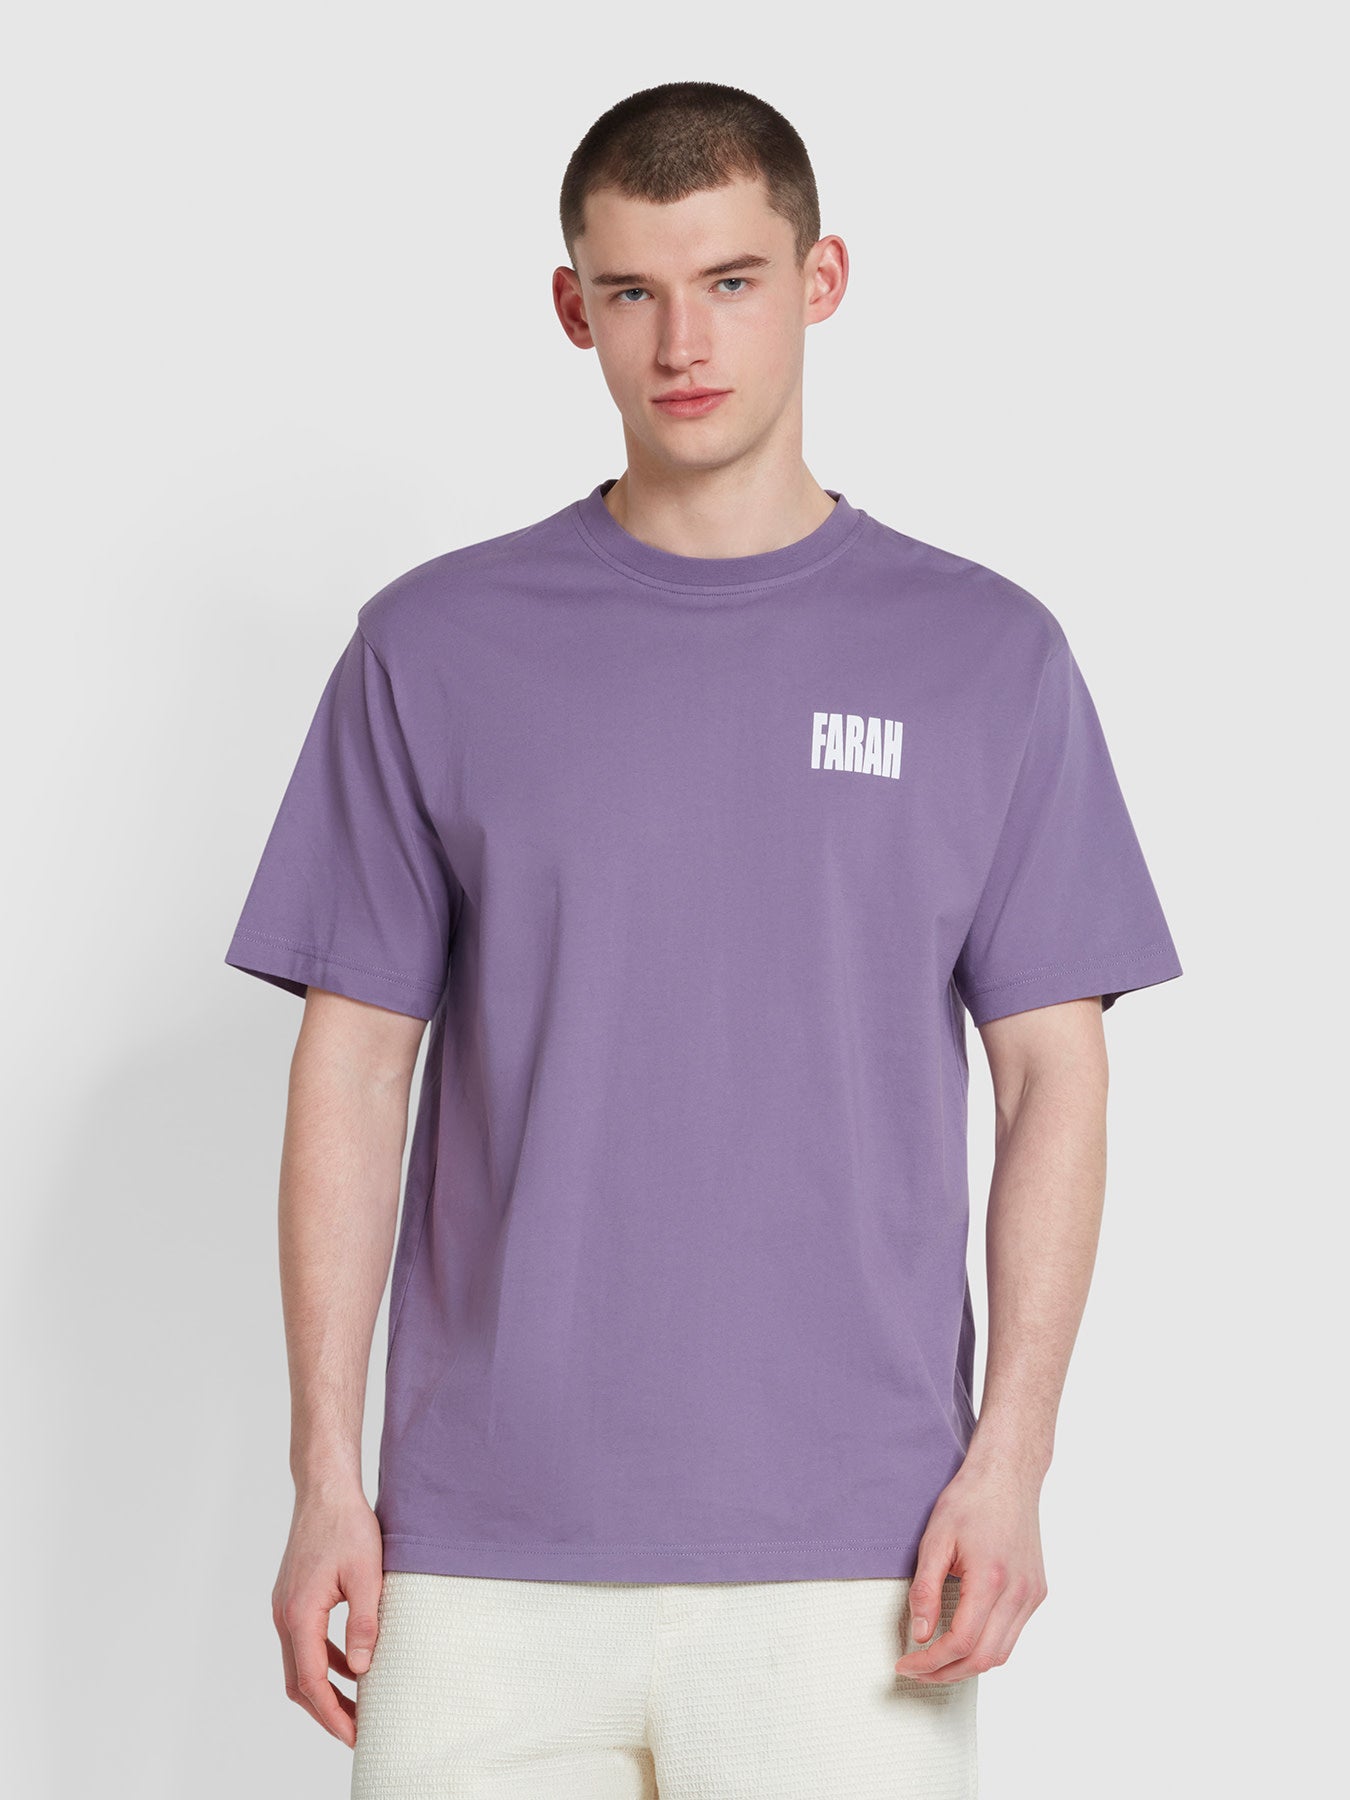 View Damon Farah Logo Print TShirt In Slate Purple information